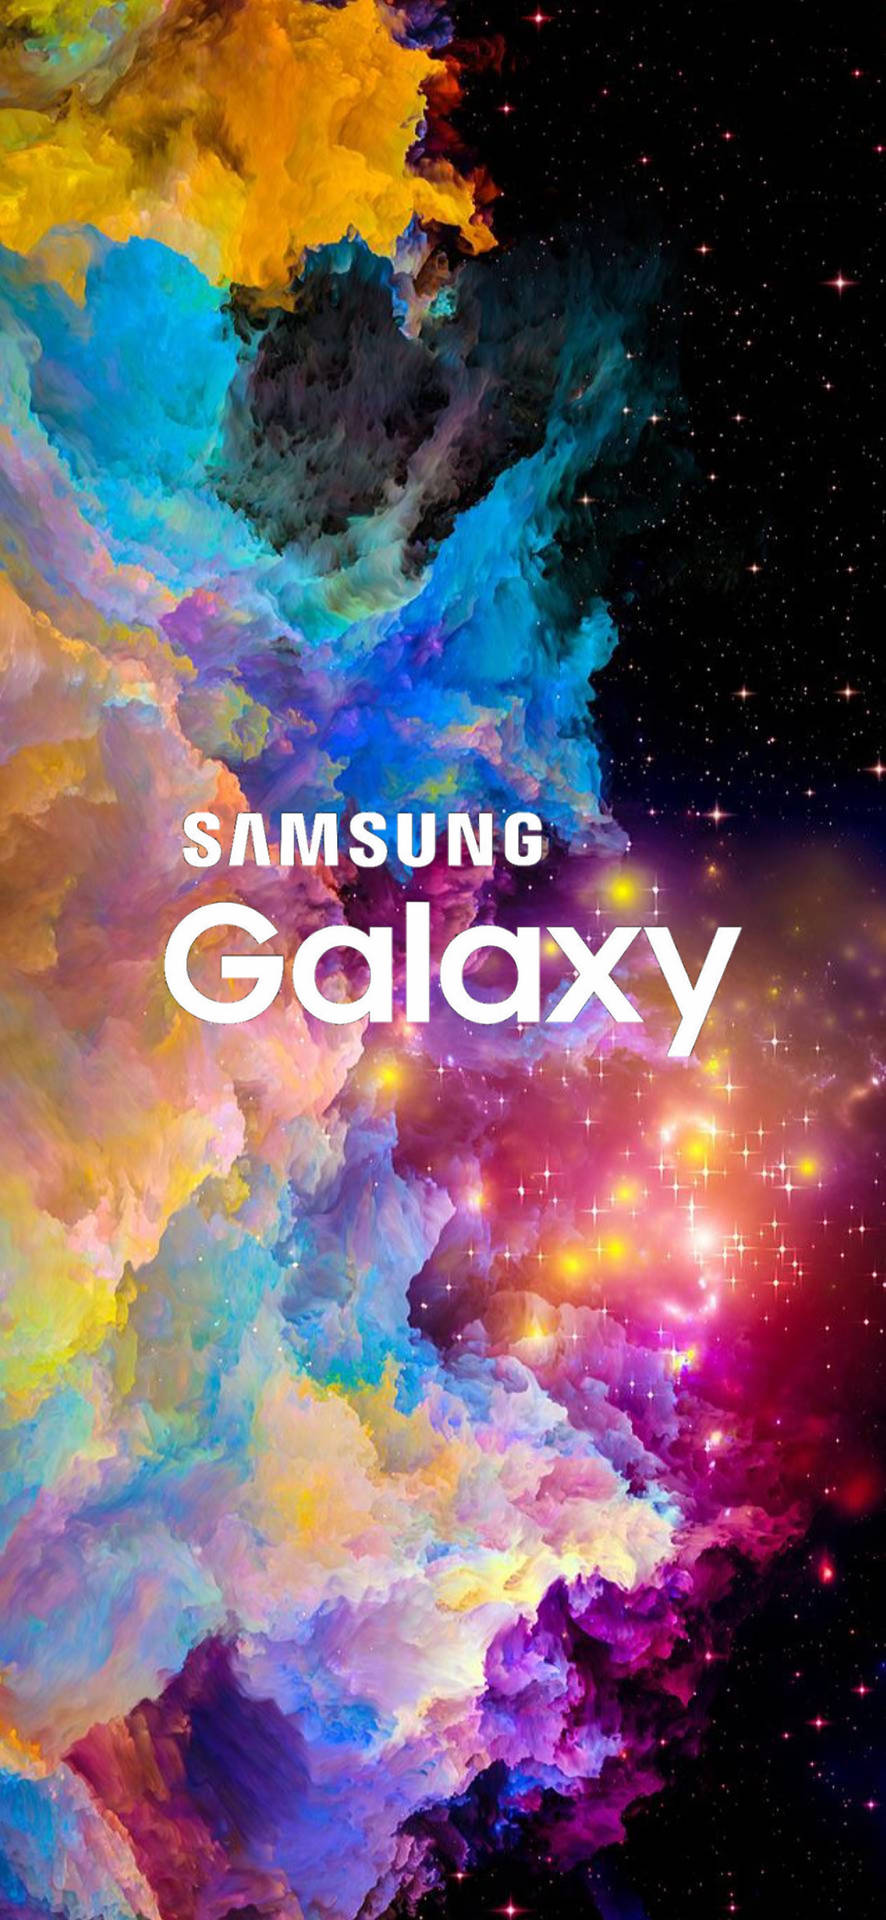 Samsung Galaxy Colorful Nebula Picture